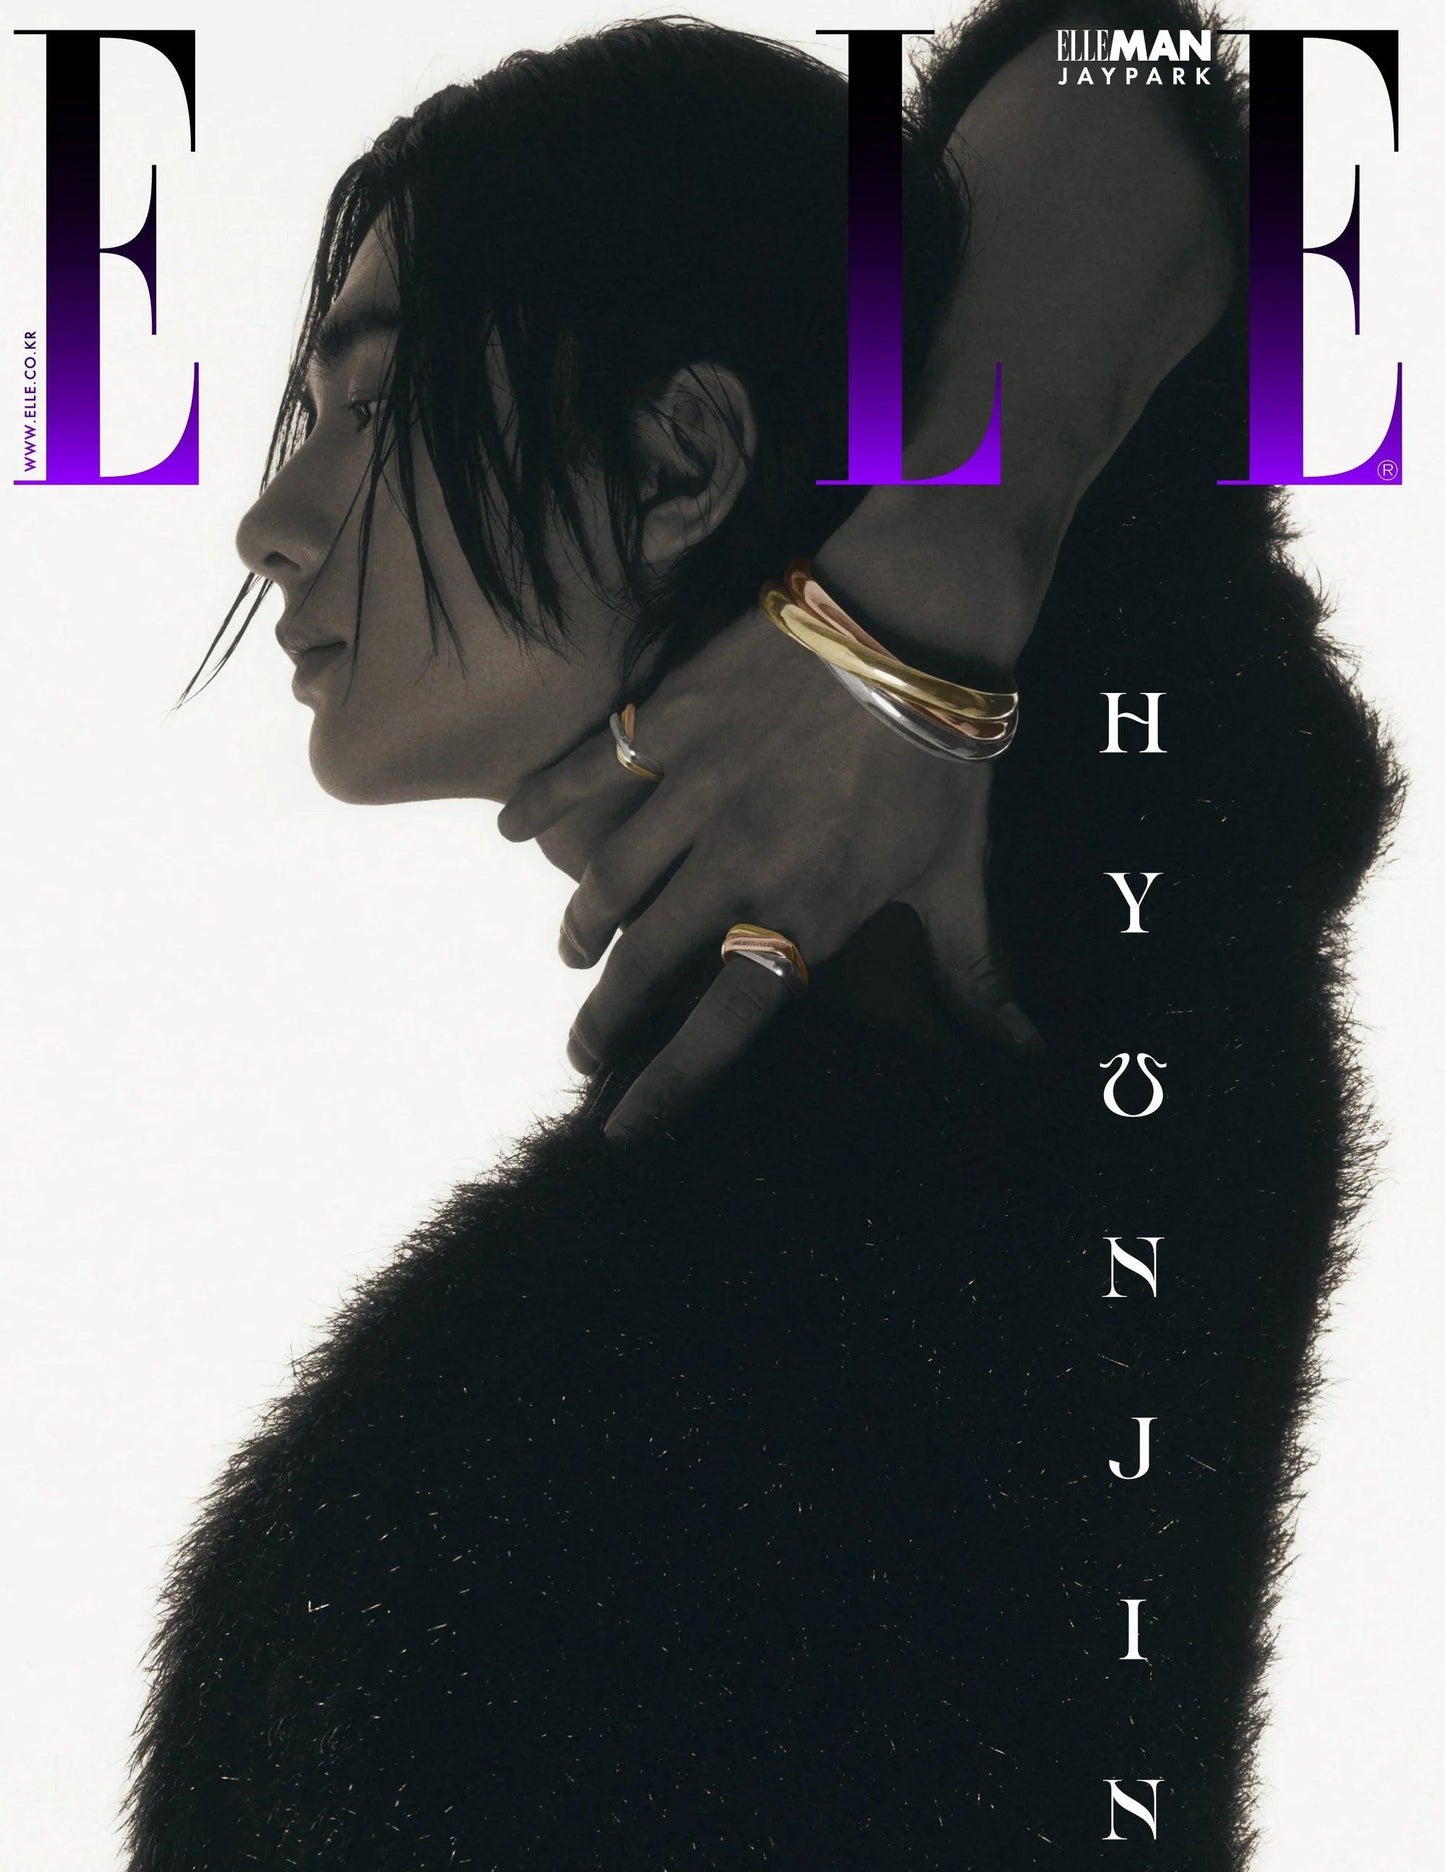 [PRE ORDER] ELLE KOREA MAGAZINE (May Issue) / COVER : HYUNJIN - KAEPJJANG SHOP (캡짱 숍)